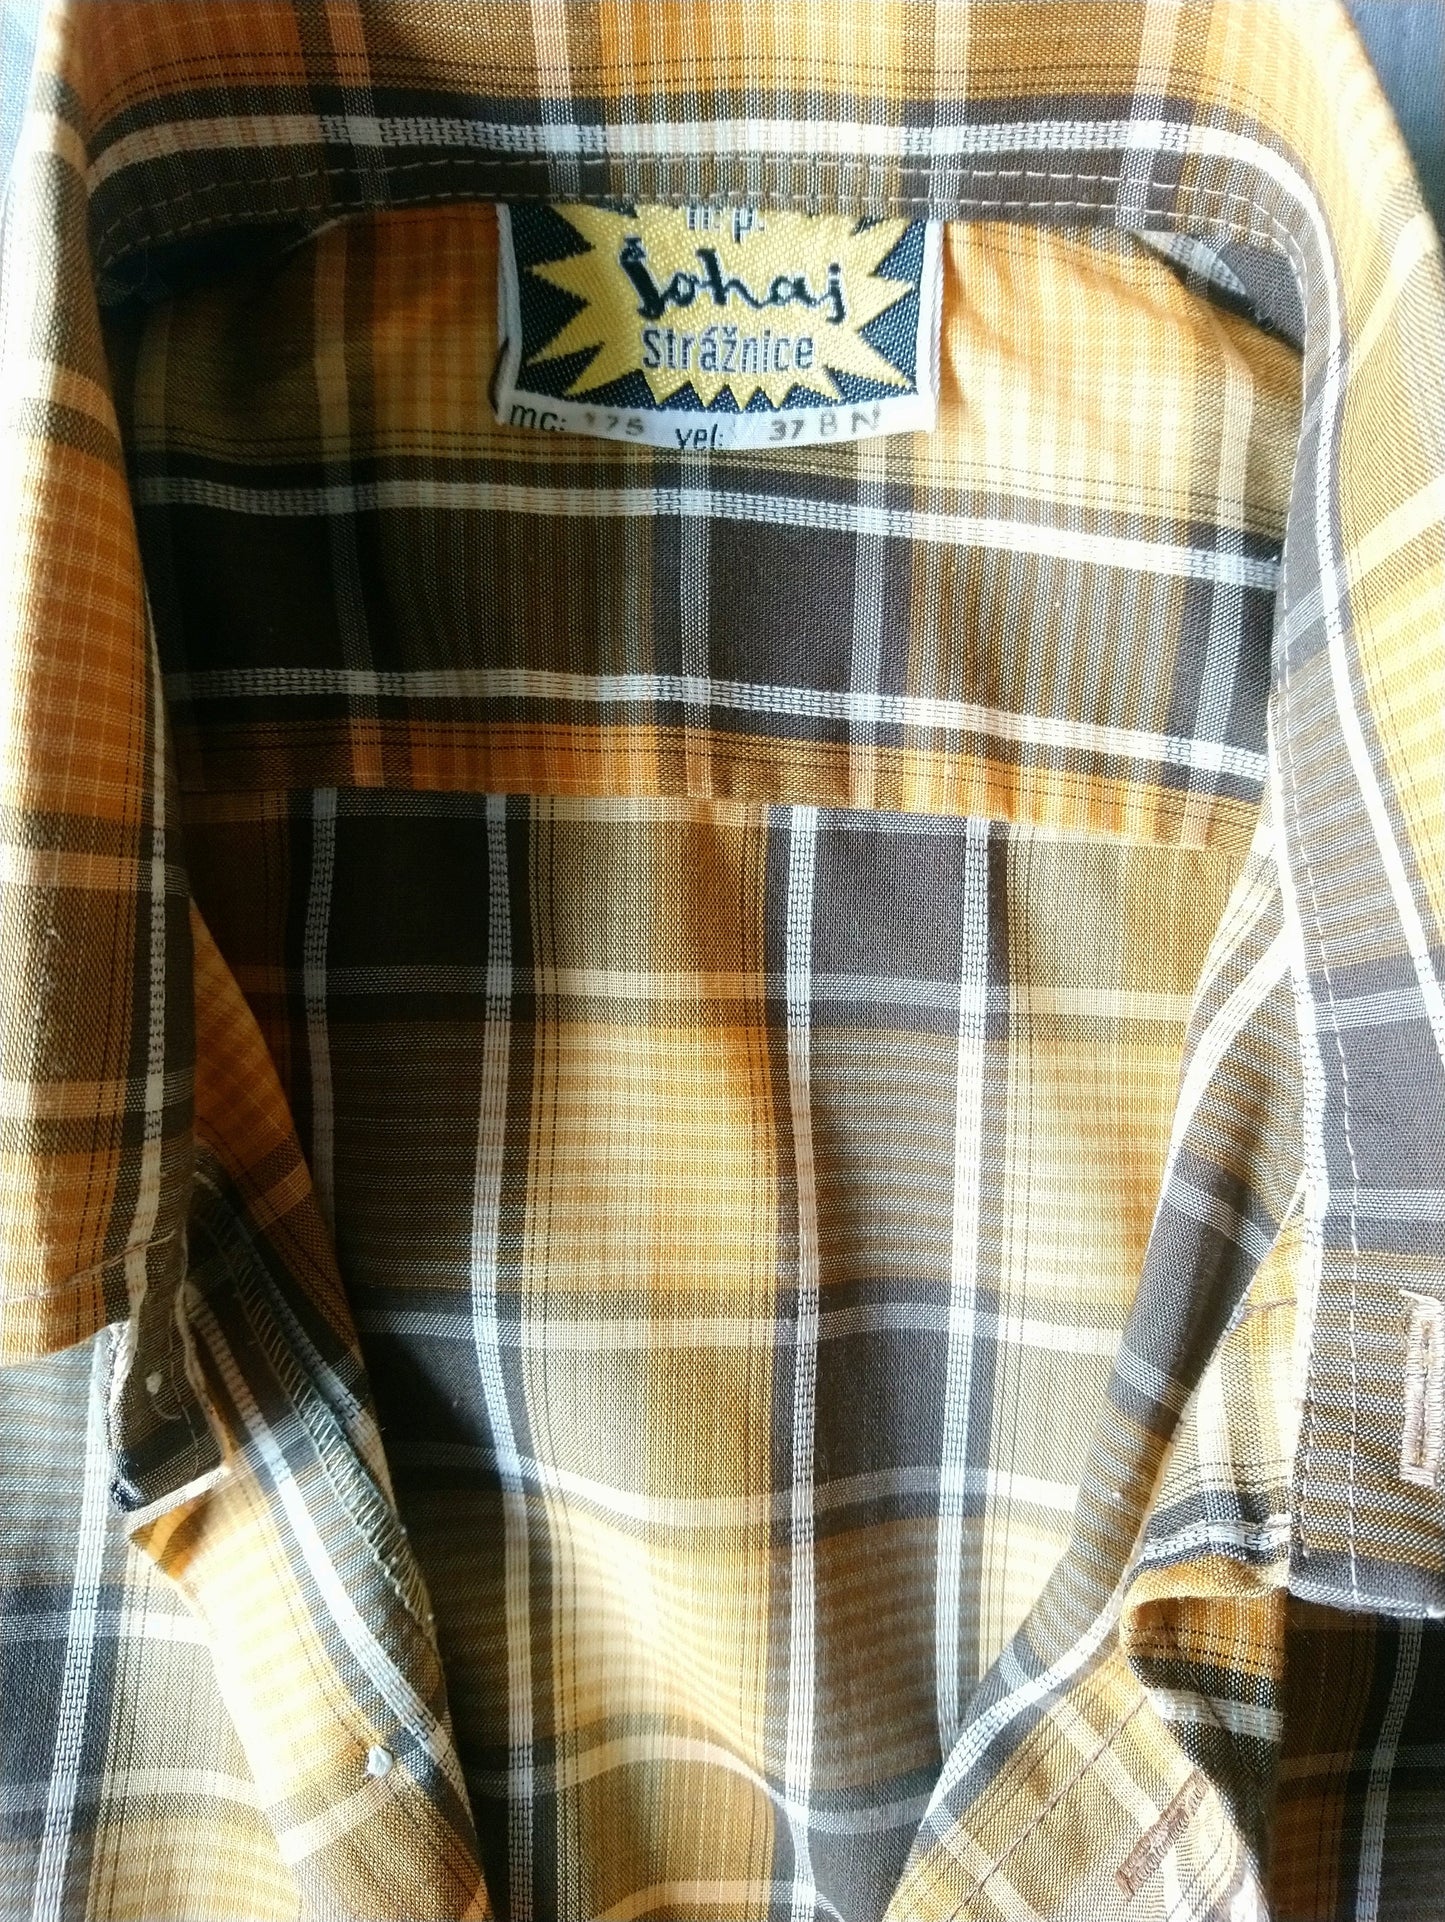 Vintage 70's Sohaj overhemd korte mouw en puntkraag. Oranje Bruin geruit. Maat M.